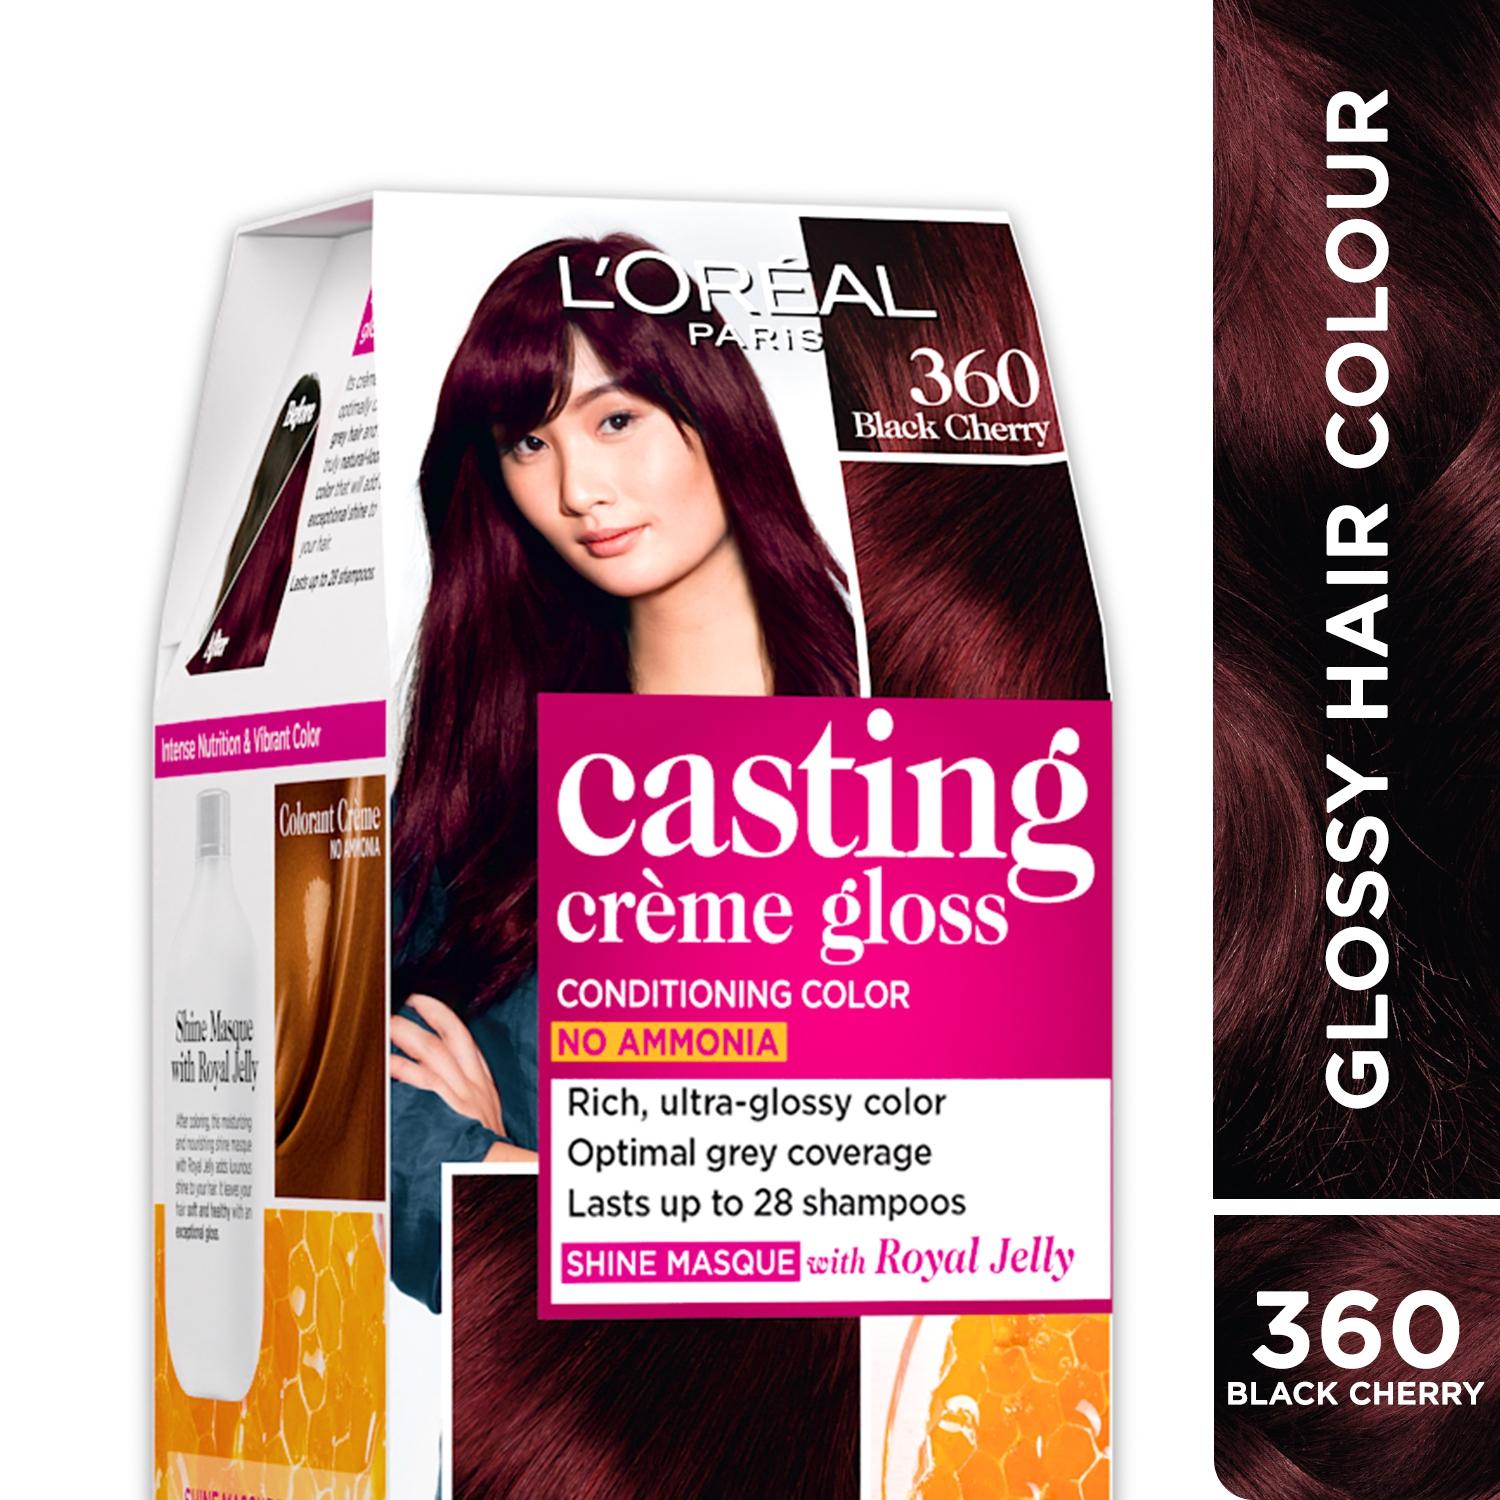 l'oreal-paris-casting-creme-gloss-hair-color,-360-black-cherry,-87.5g+72ml